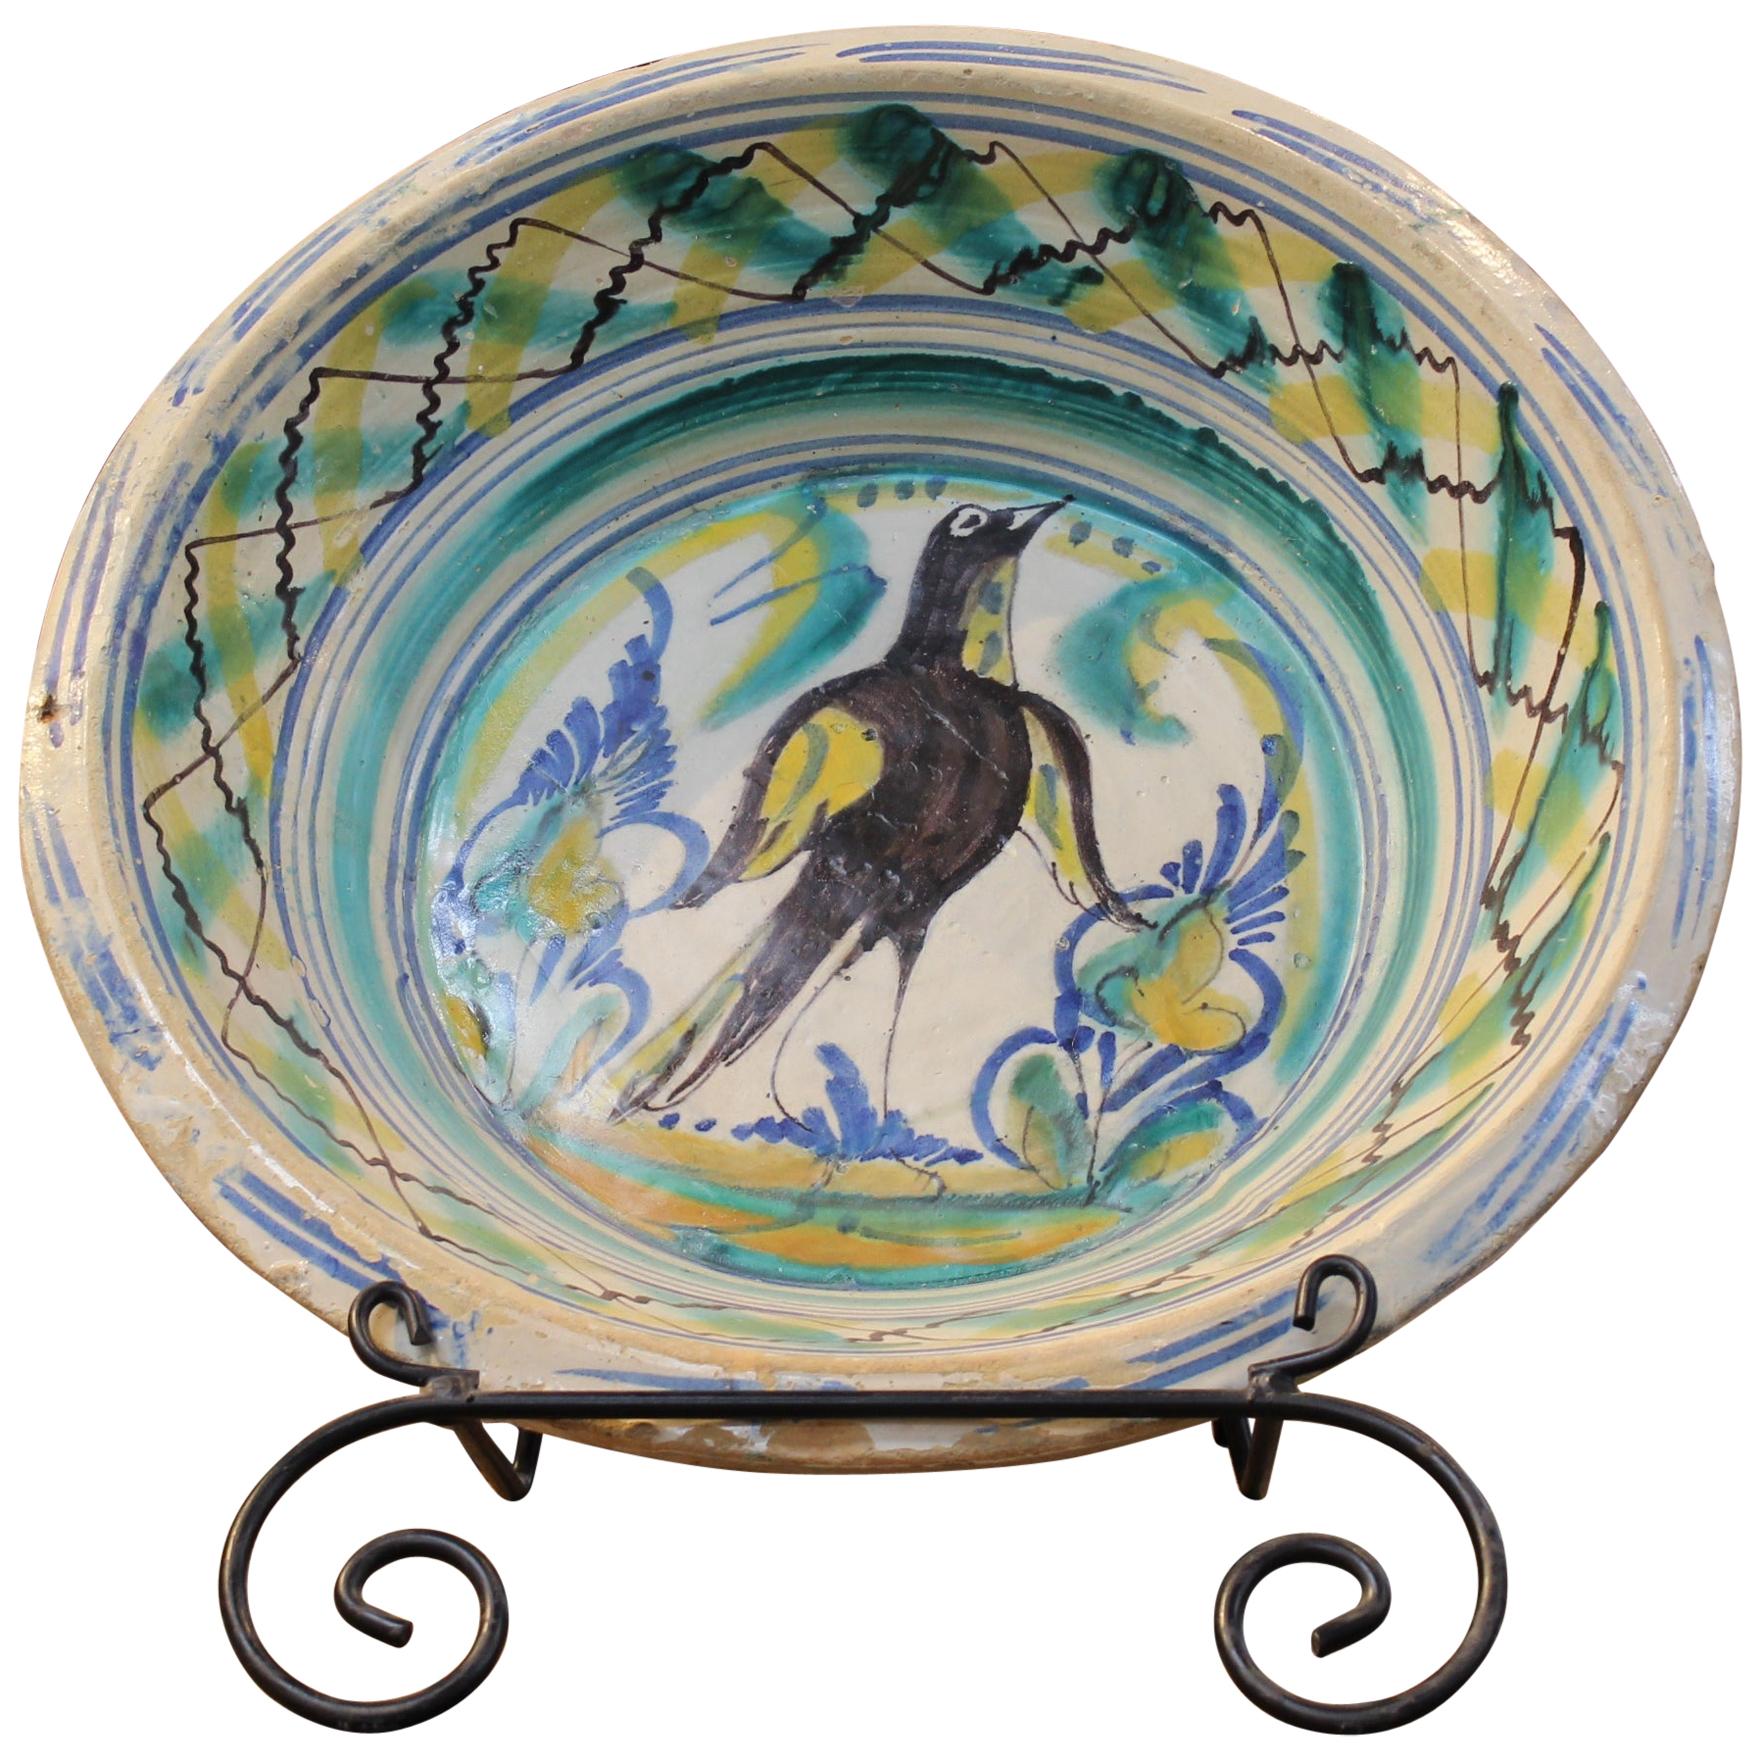 19th Century Spanish Triana "Lebrillo" Ceramic Plate with Painted Bird